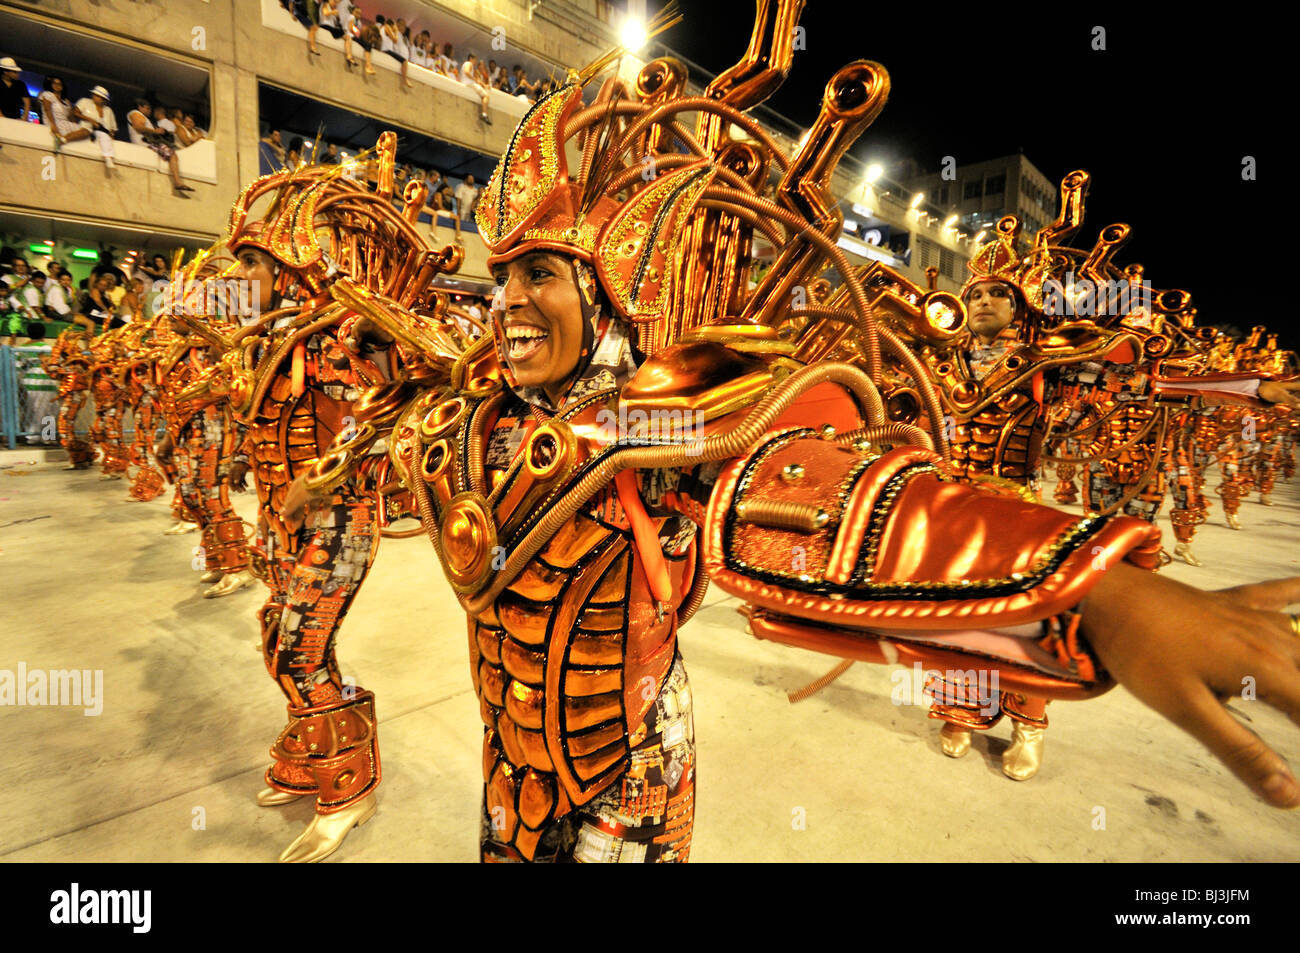 Samba school Portela, Carnaval 2010, Sambodromo, Rio de Janeiro, Brazil Stock Photo